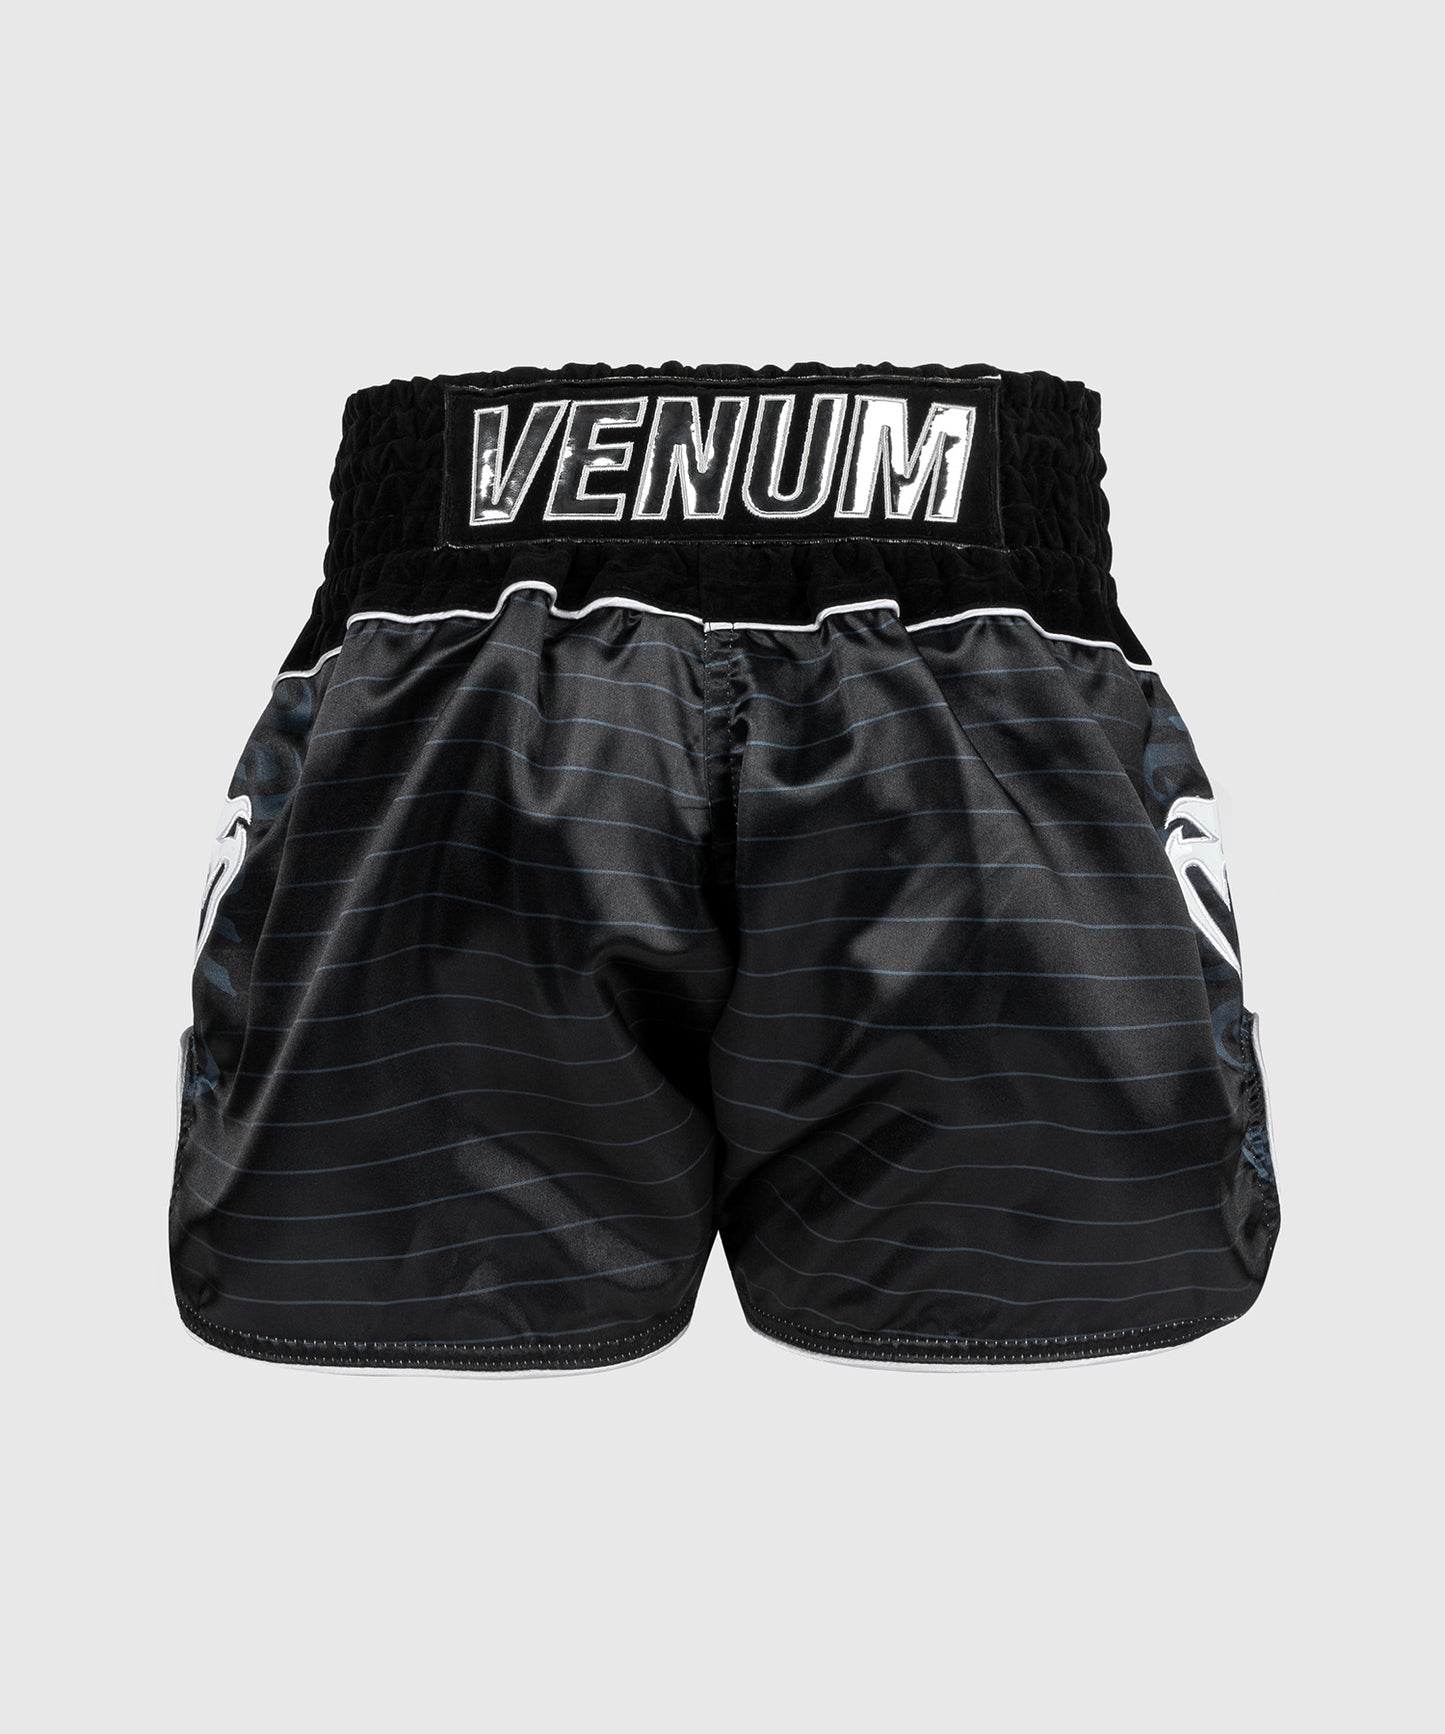 Venum Attack Shorts de Muay Thai - Negro/Plata